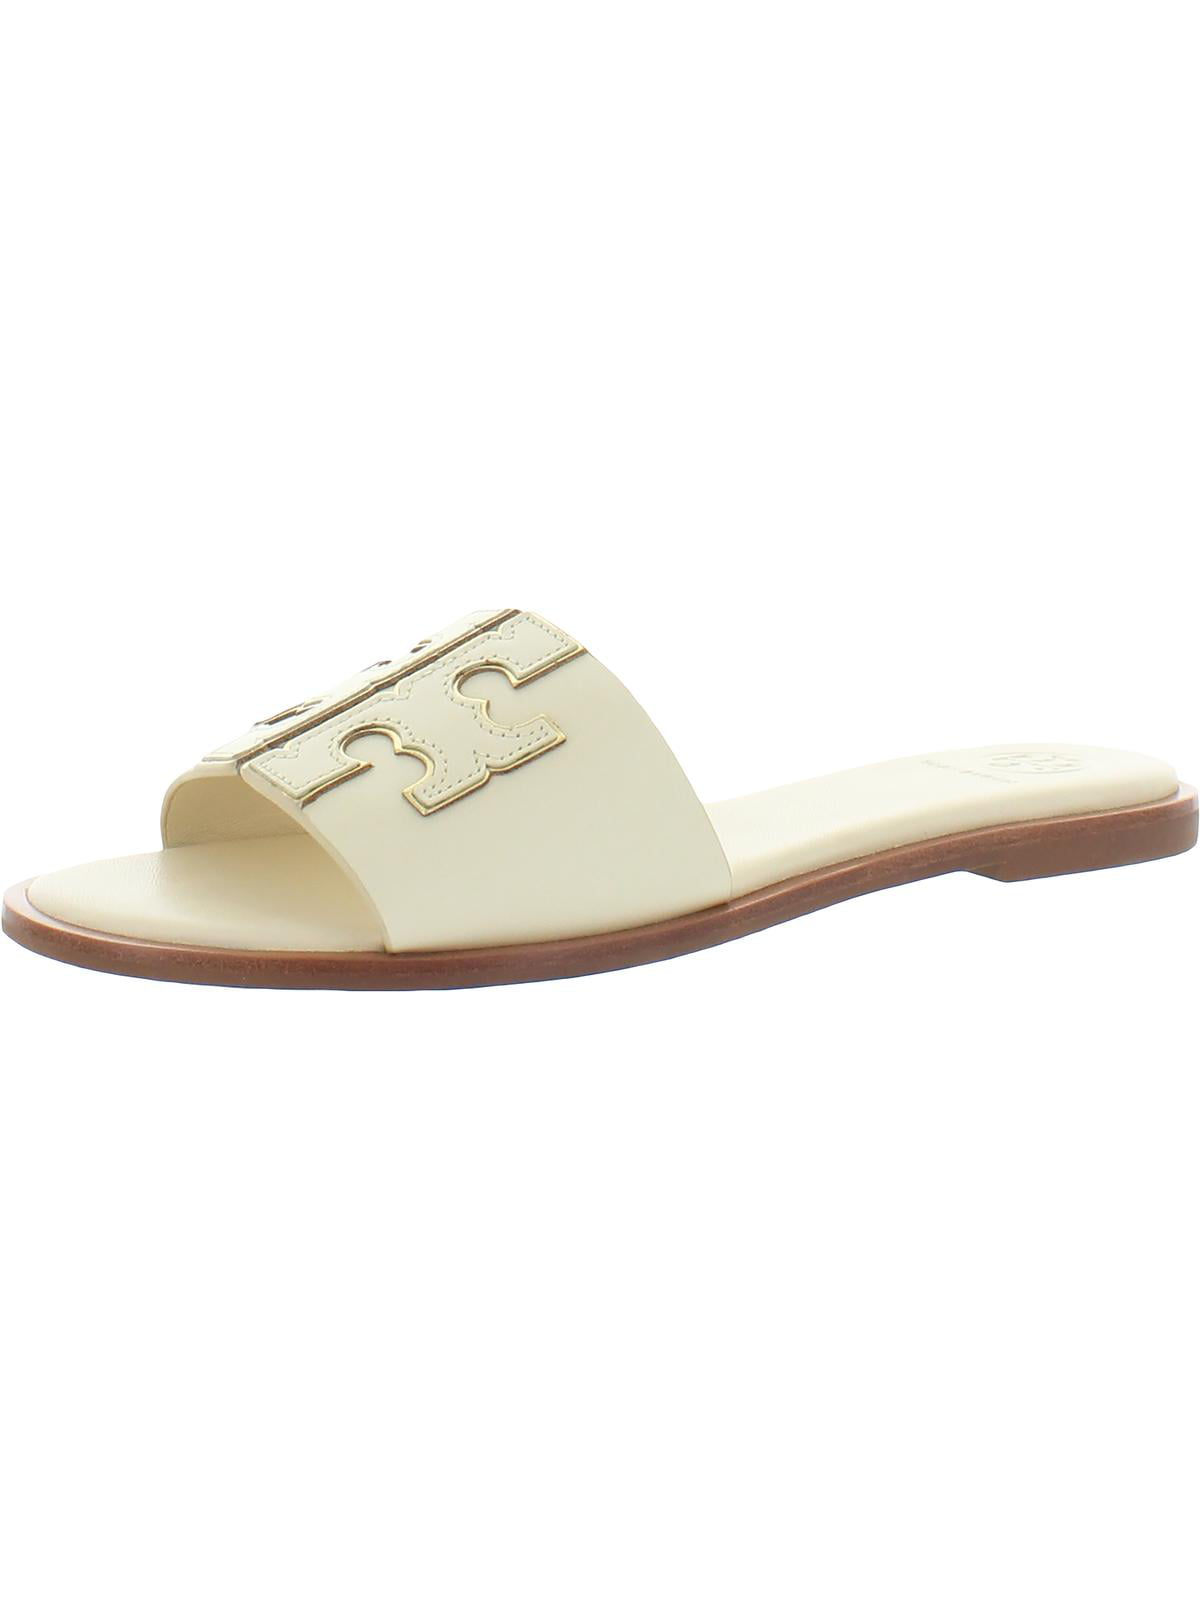 Tory Burch Womens Ines Slide Leather Logo Slide Sandals - Walmart.com